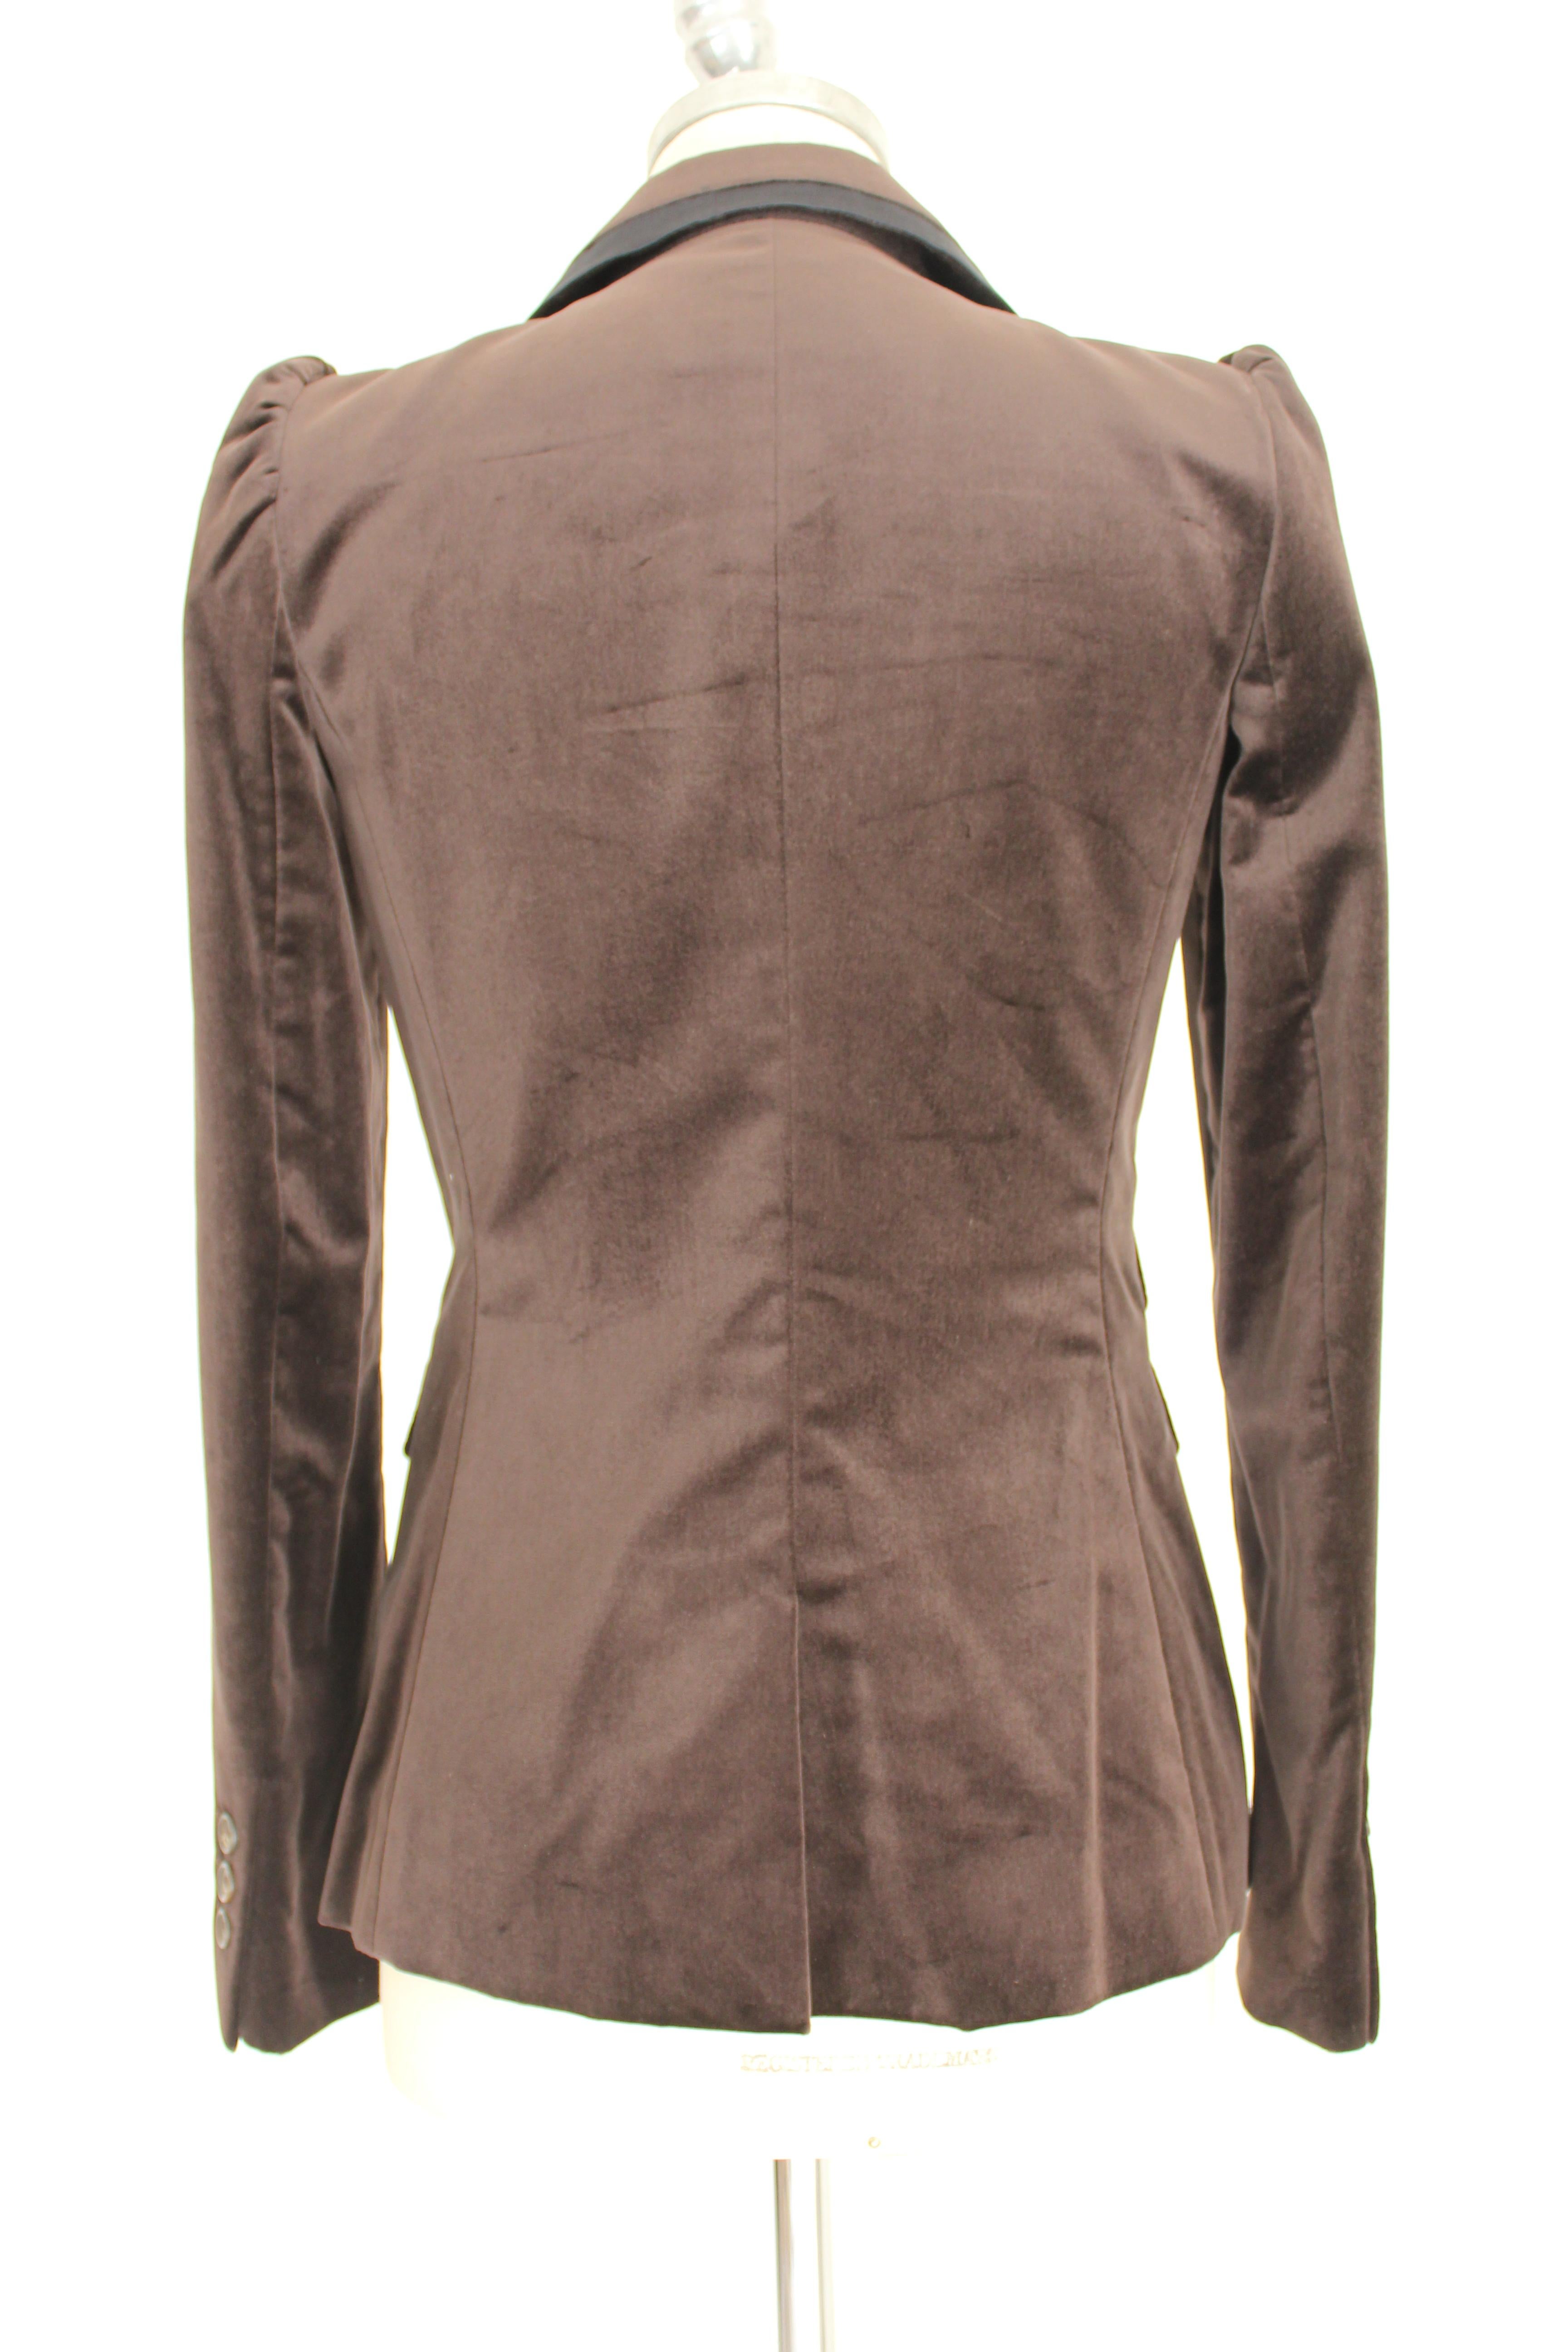 Dolce & Gabbana 90's vintage women's jacket. Flared brown color, velvet fabric with black satin edges. Made in Italy. Excellent vintage condition.

Size: 42 It 8 Us 10 Uk

Shoulder: 42 cm
Bust/Chest: 44 cm
Sleeve: 62 cm
Length: 77 cm